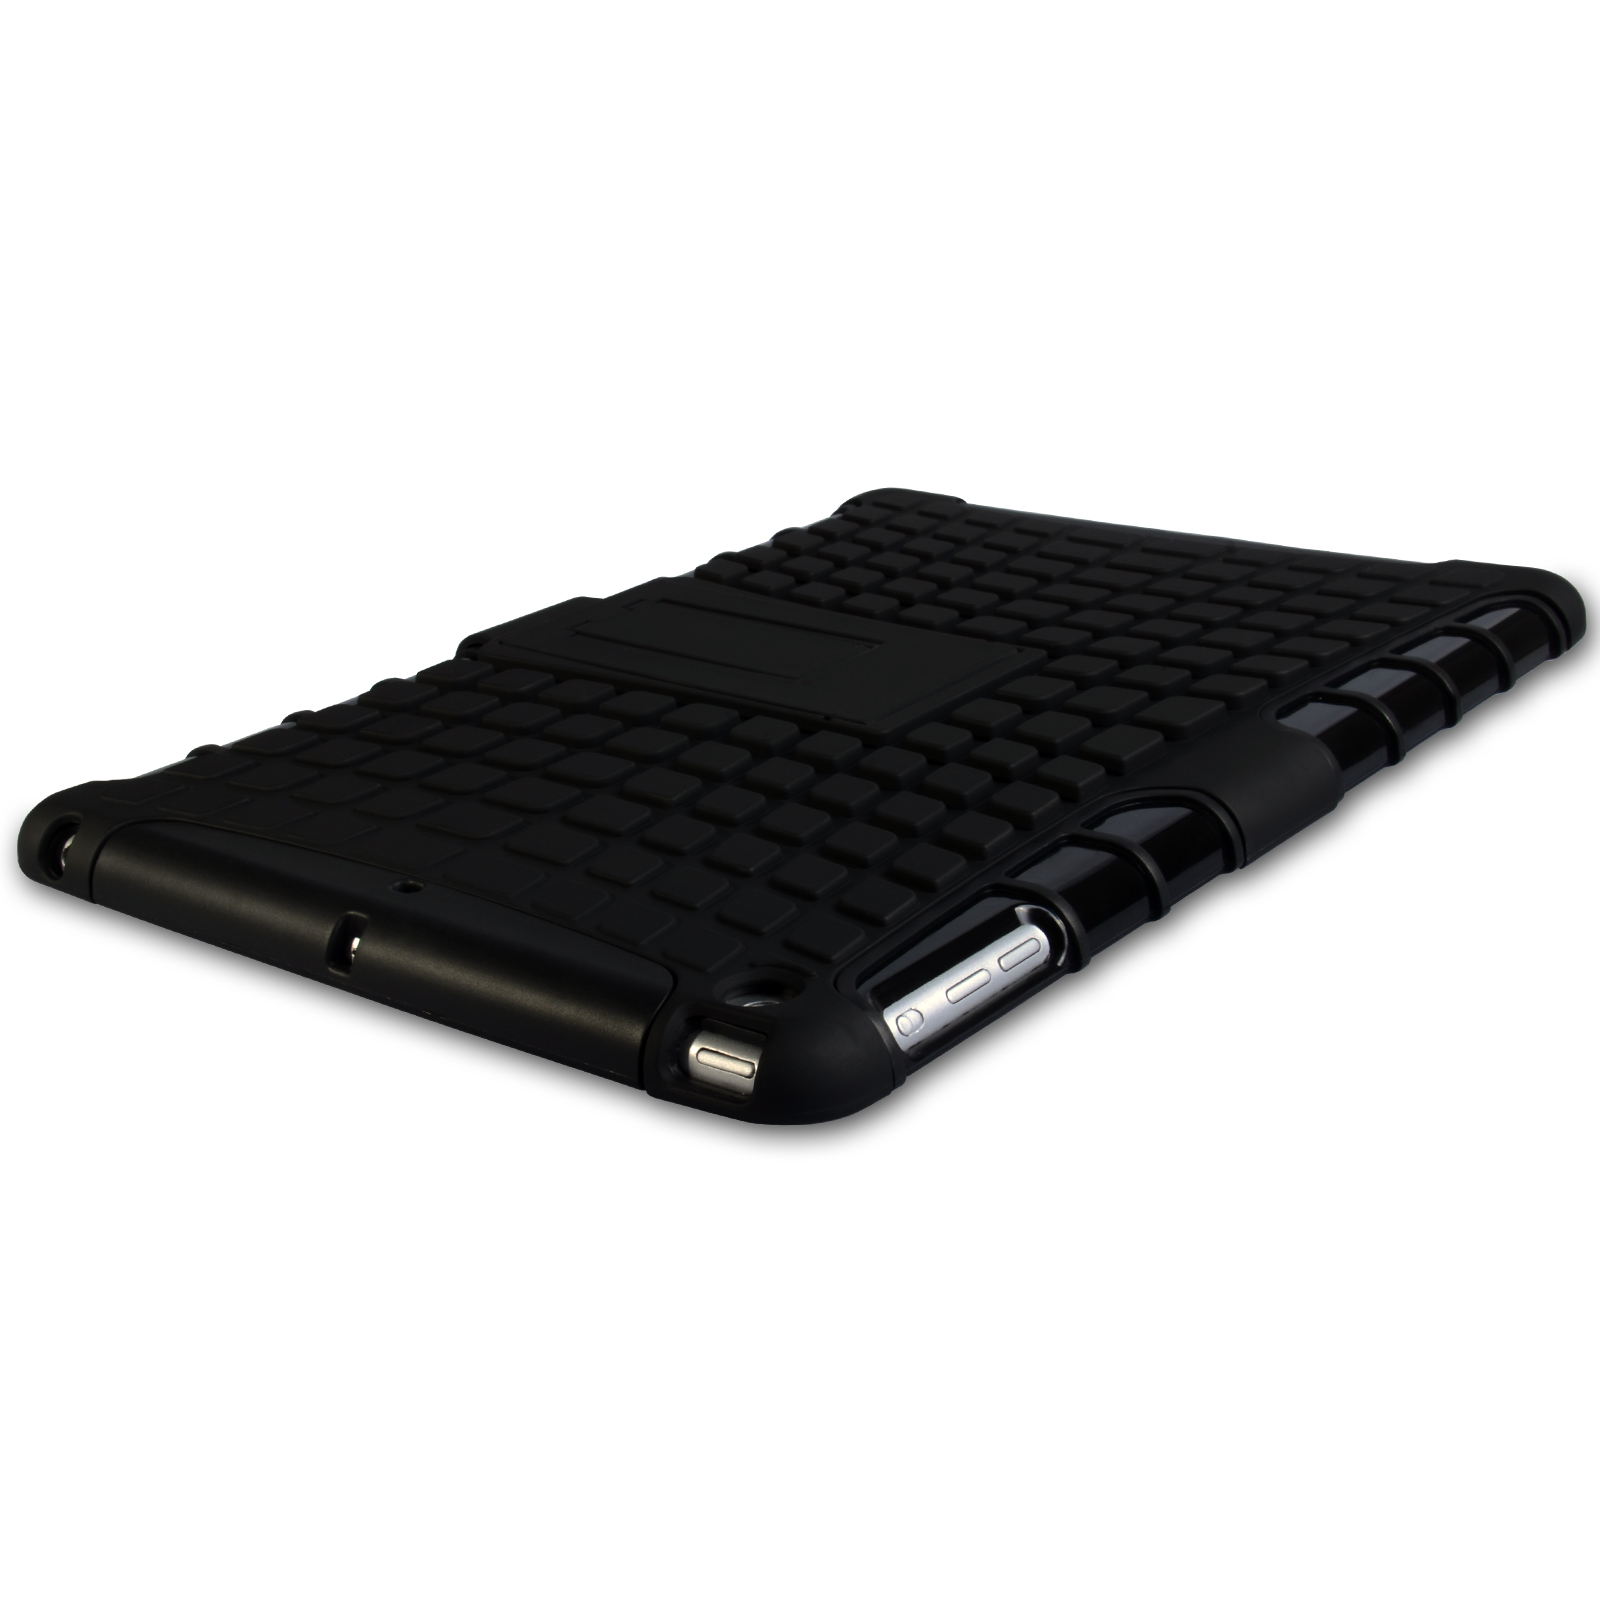 Caseflex iPad 2, 3, 4 Tough Stand Cover - Black